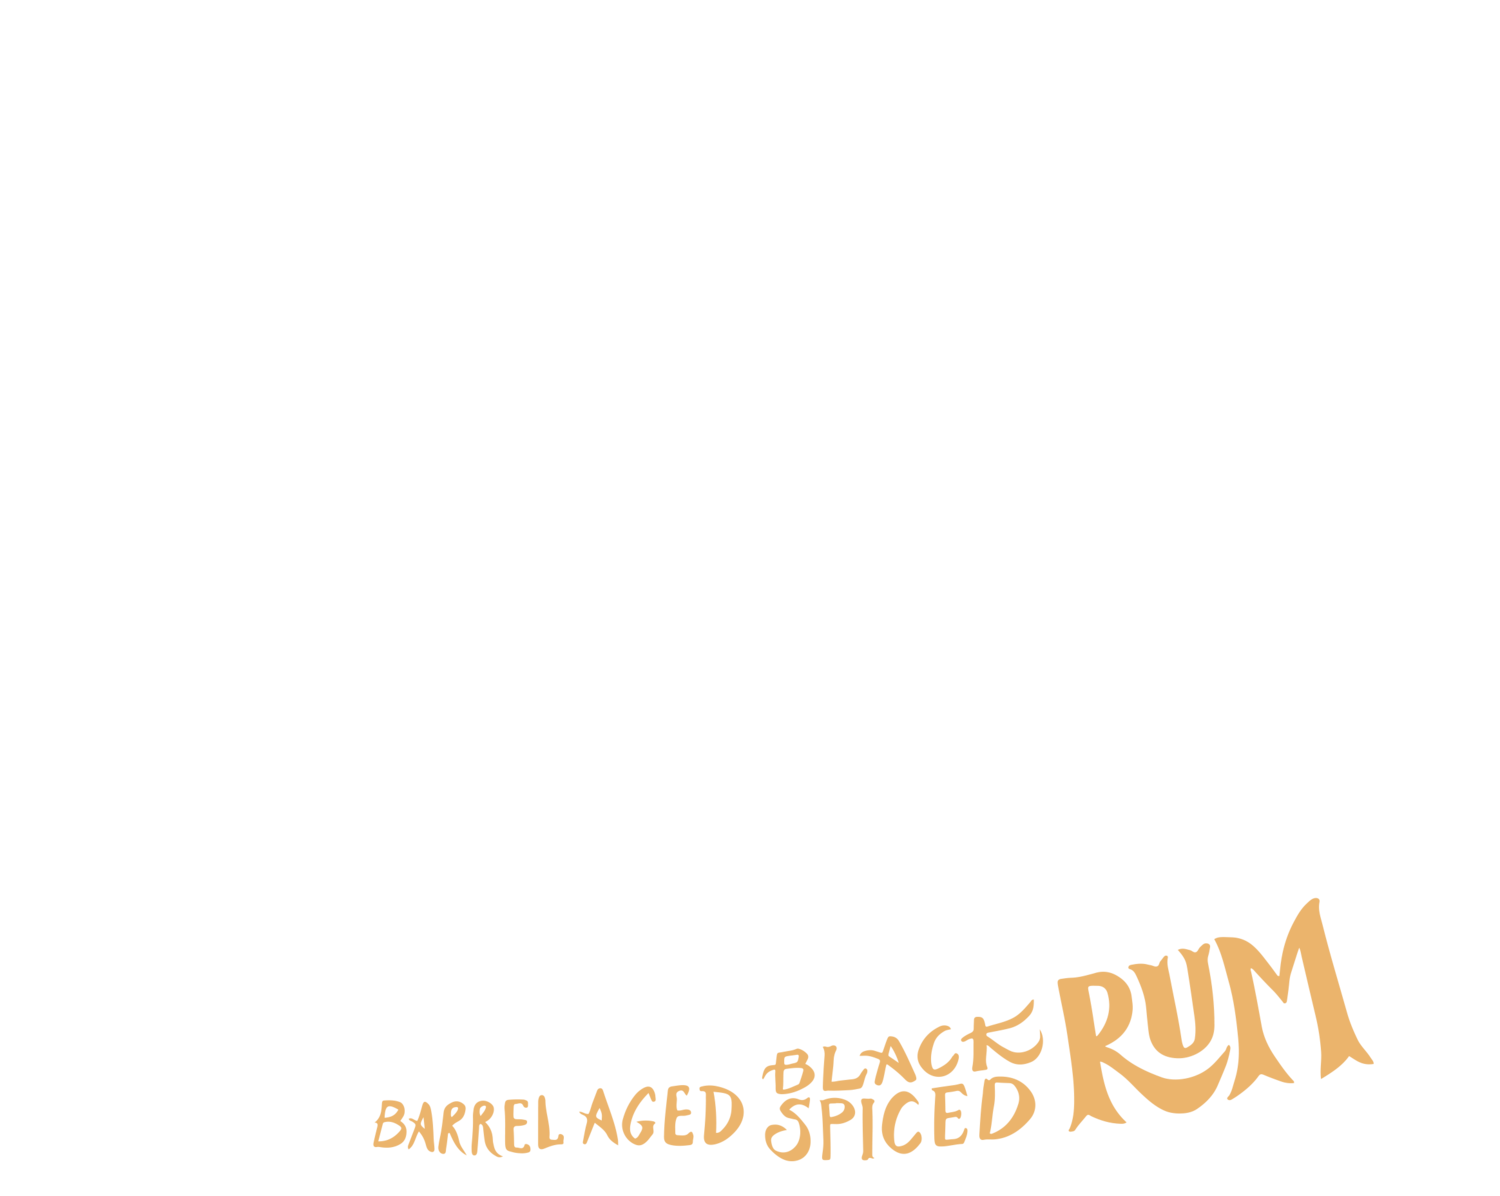 Crusty Juggler: Barrel Aged Black Spiced Rum from Cornwall